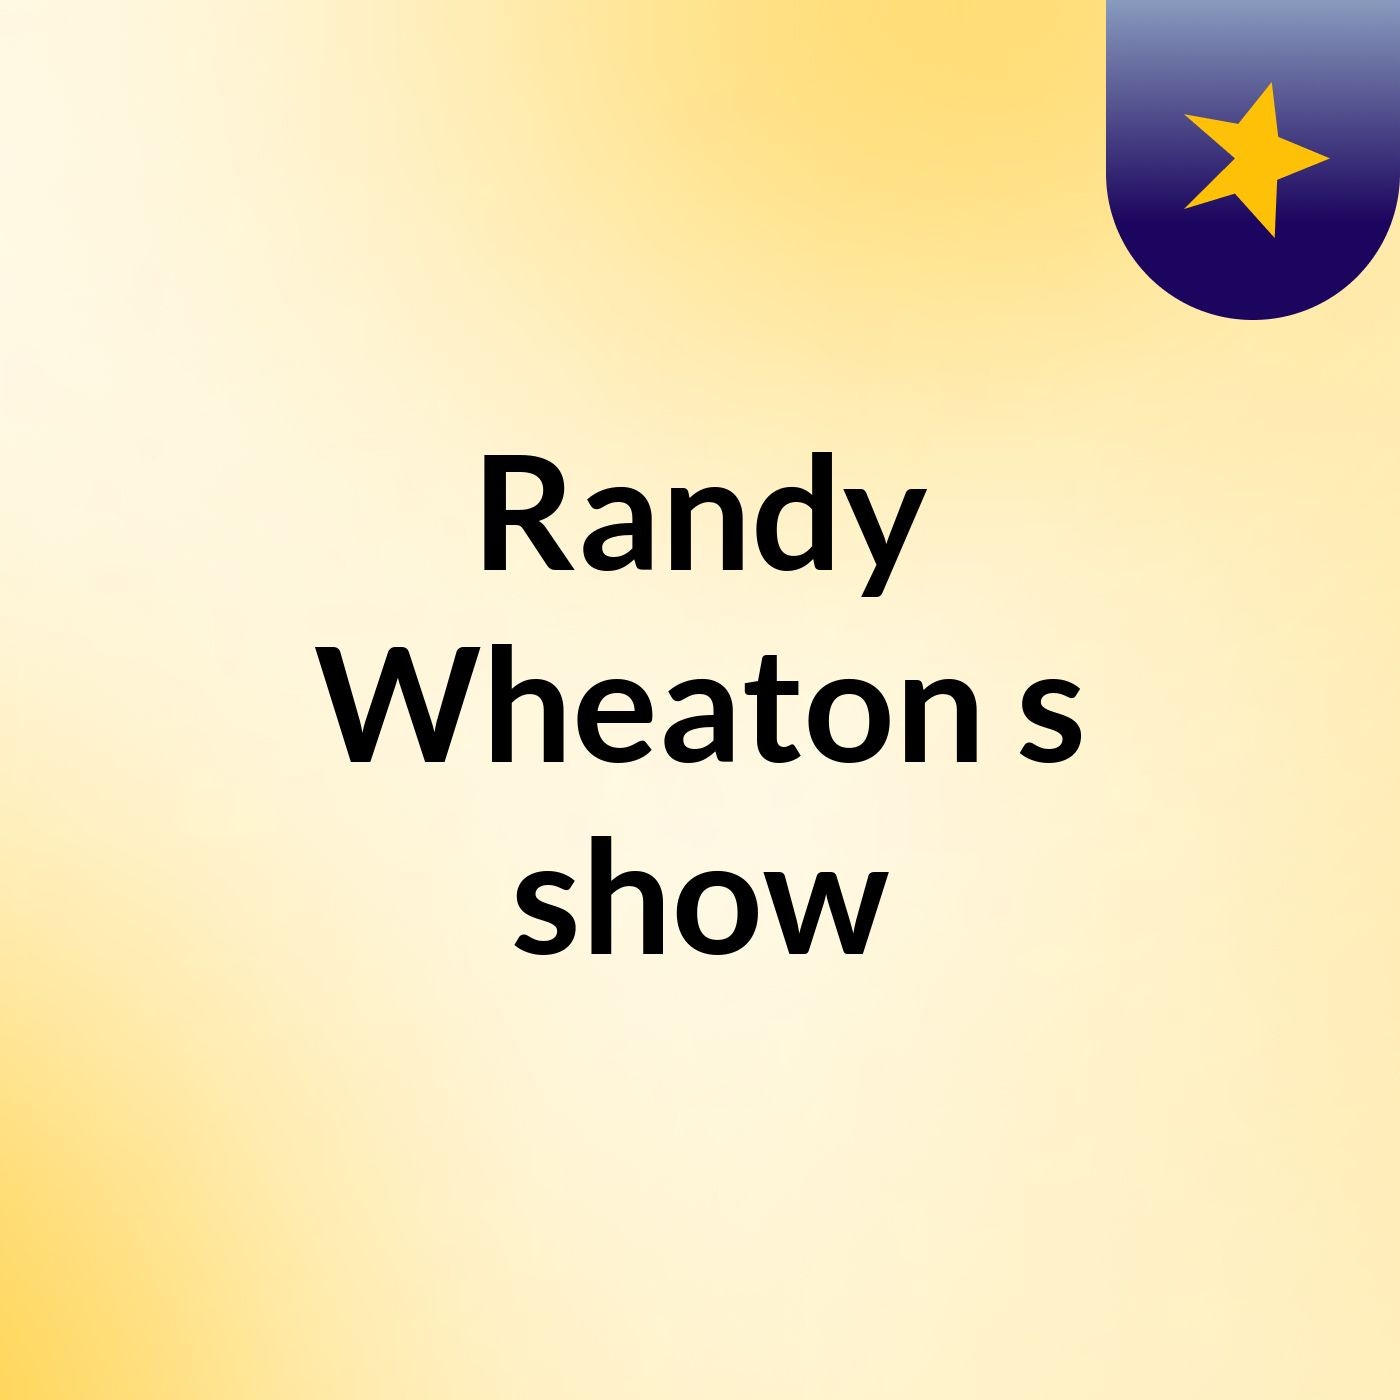 Randy Wheaton's show